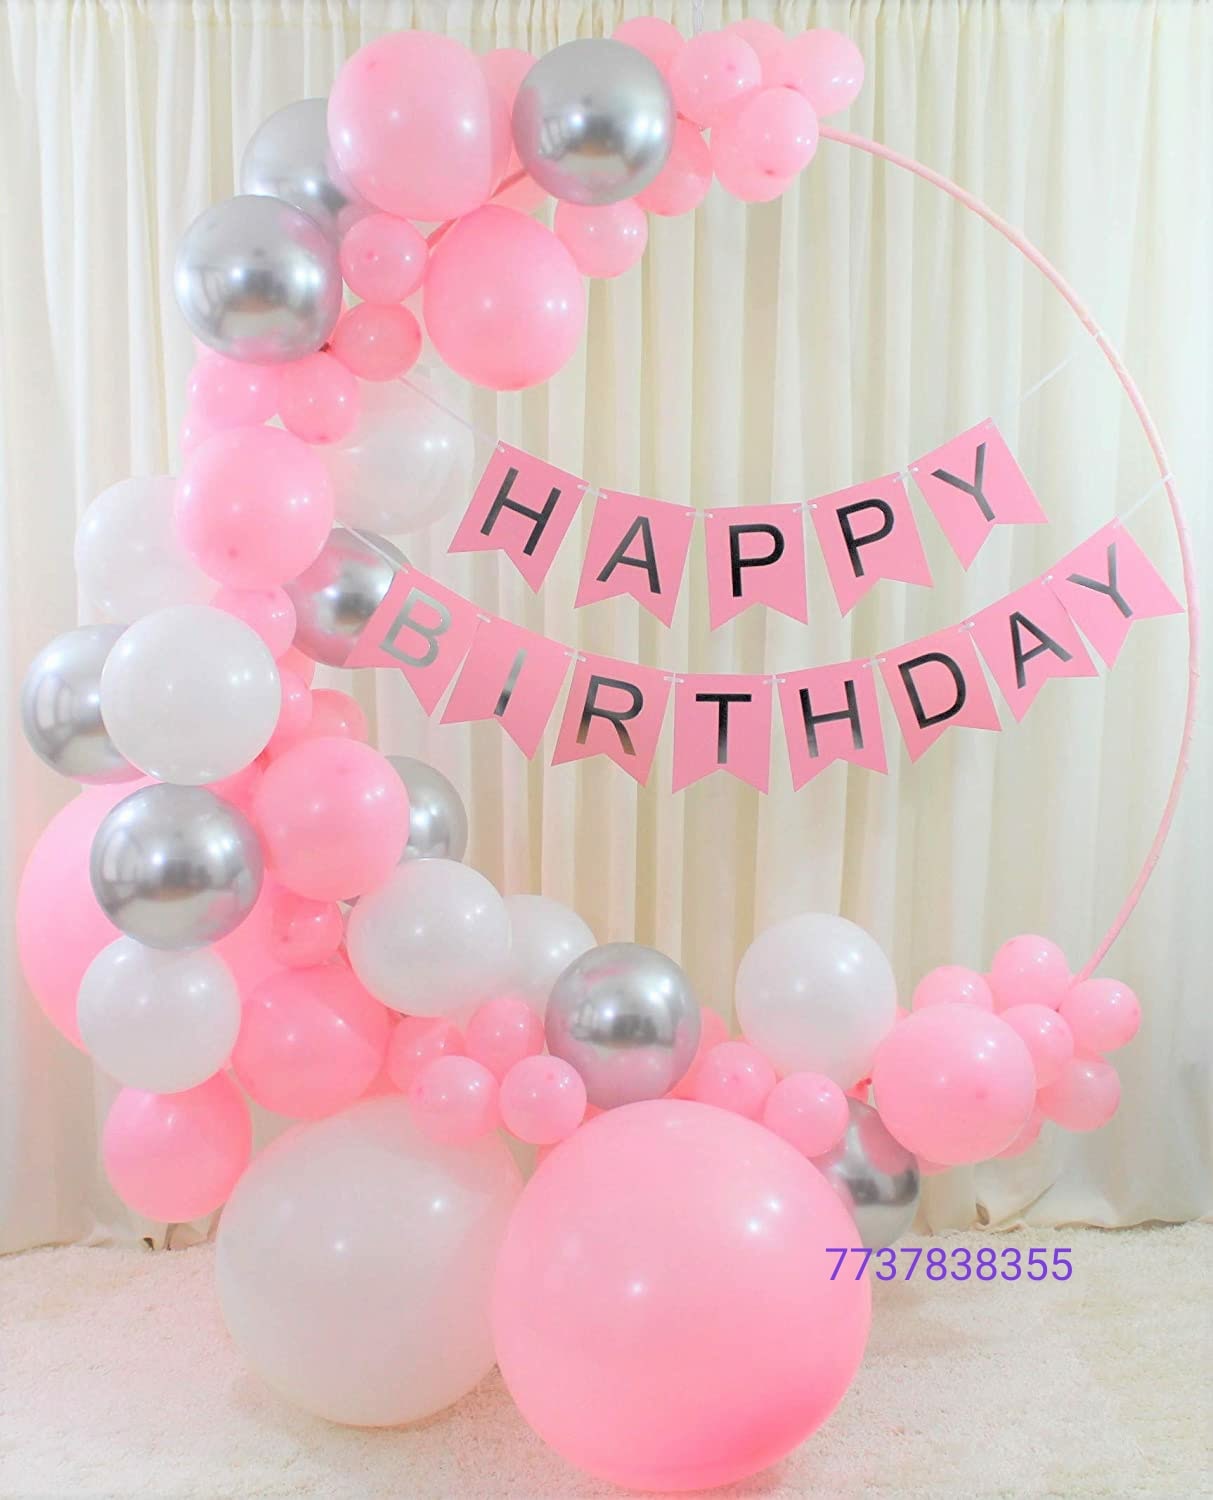 Happy Birthday, Balloon Decoration, Dreamdecor4u